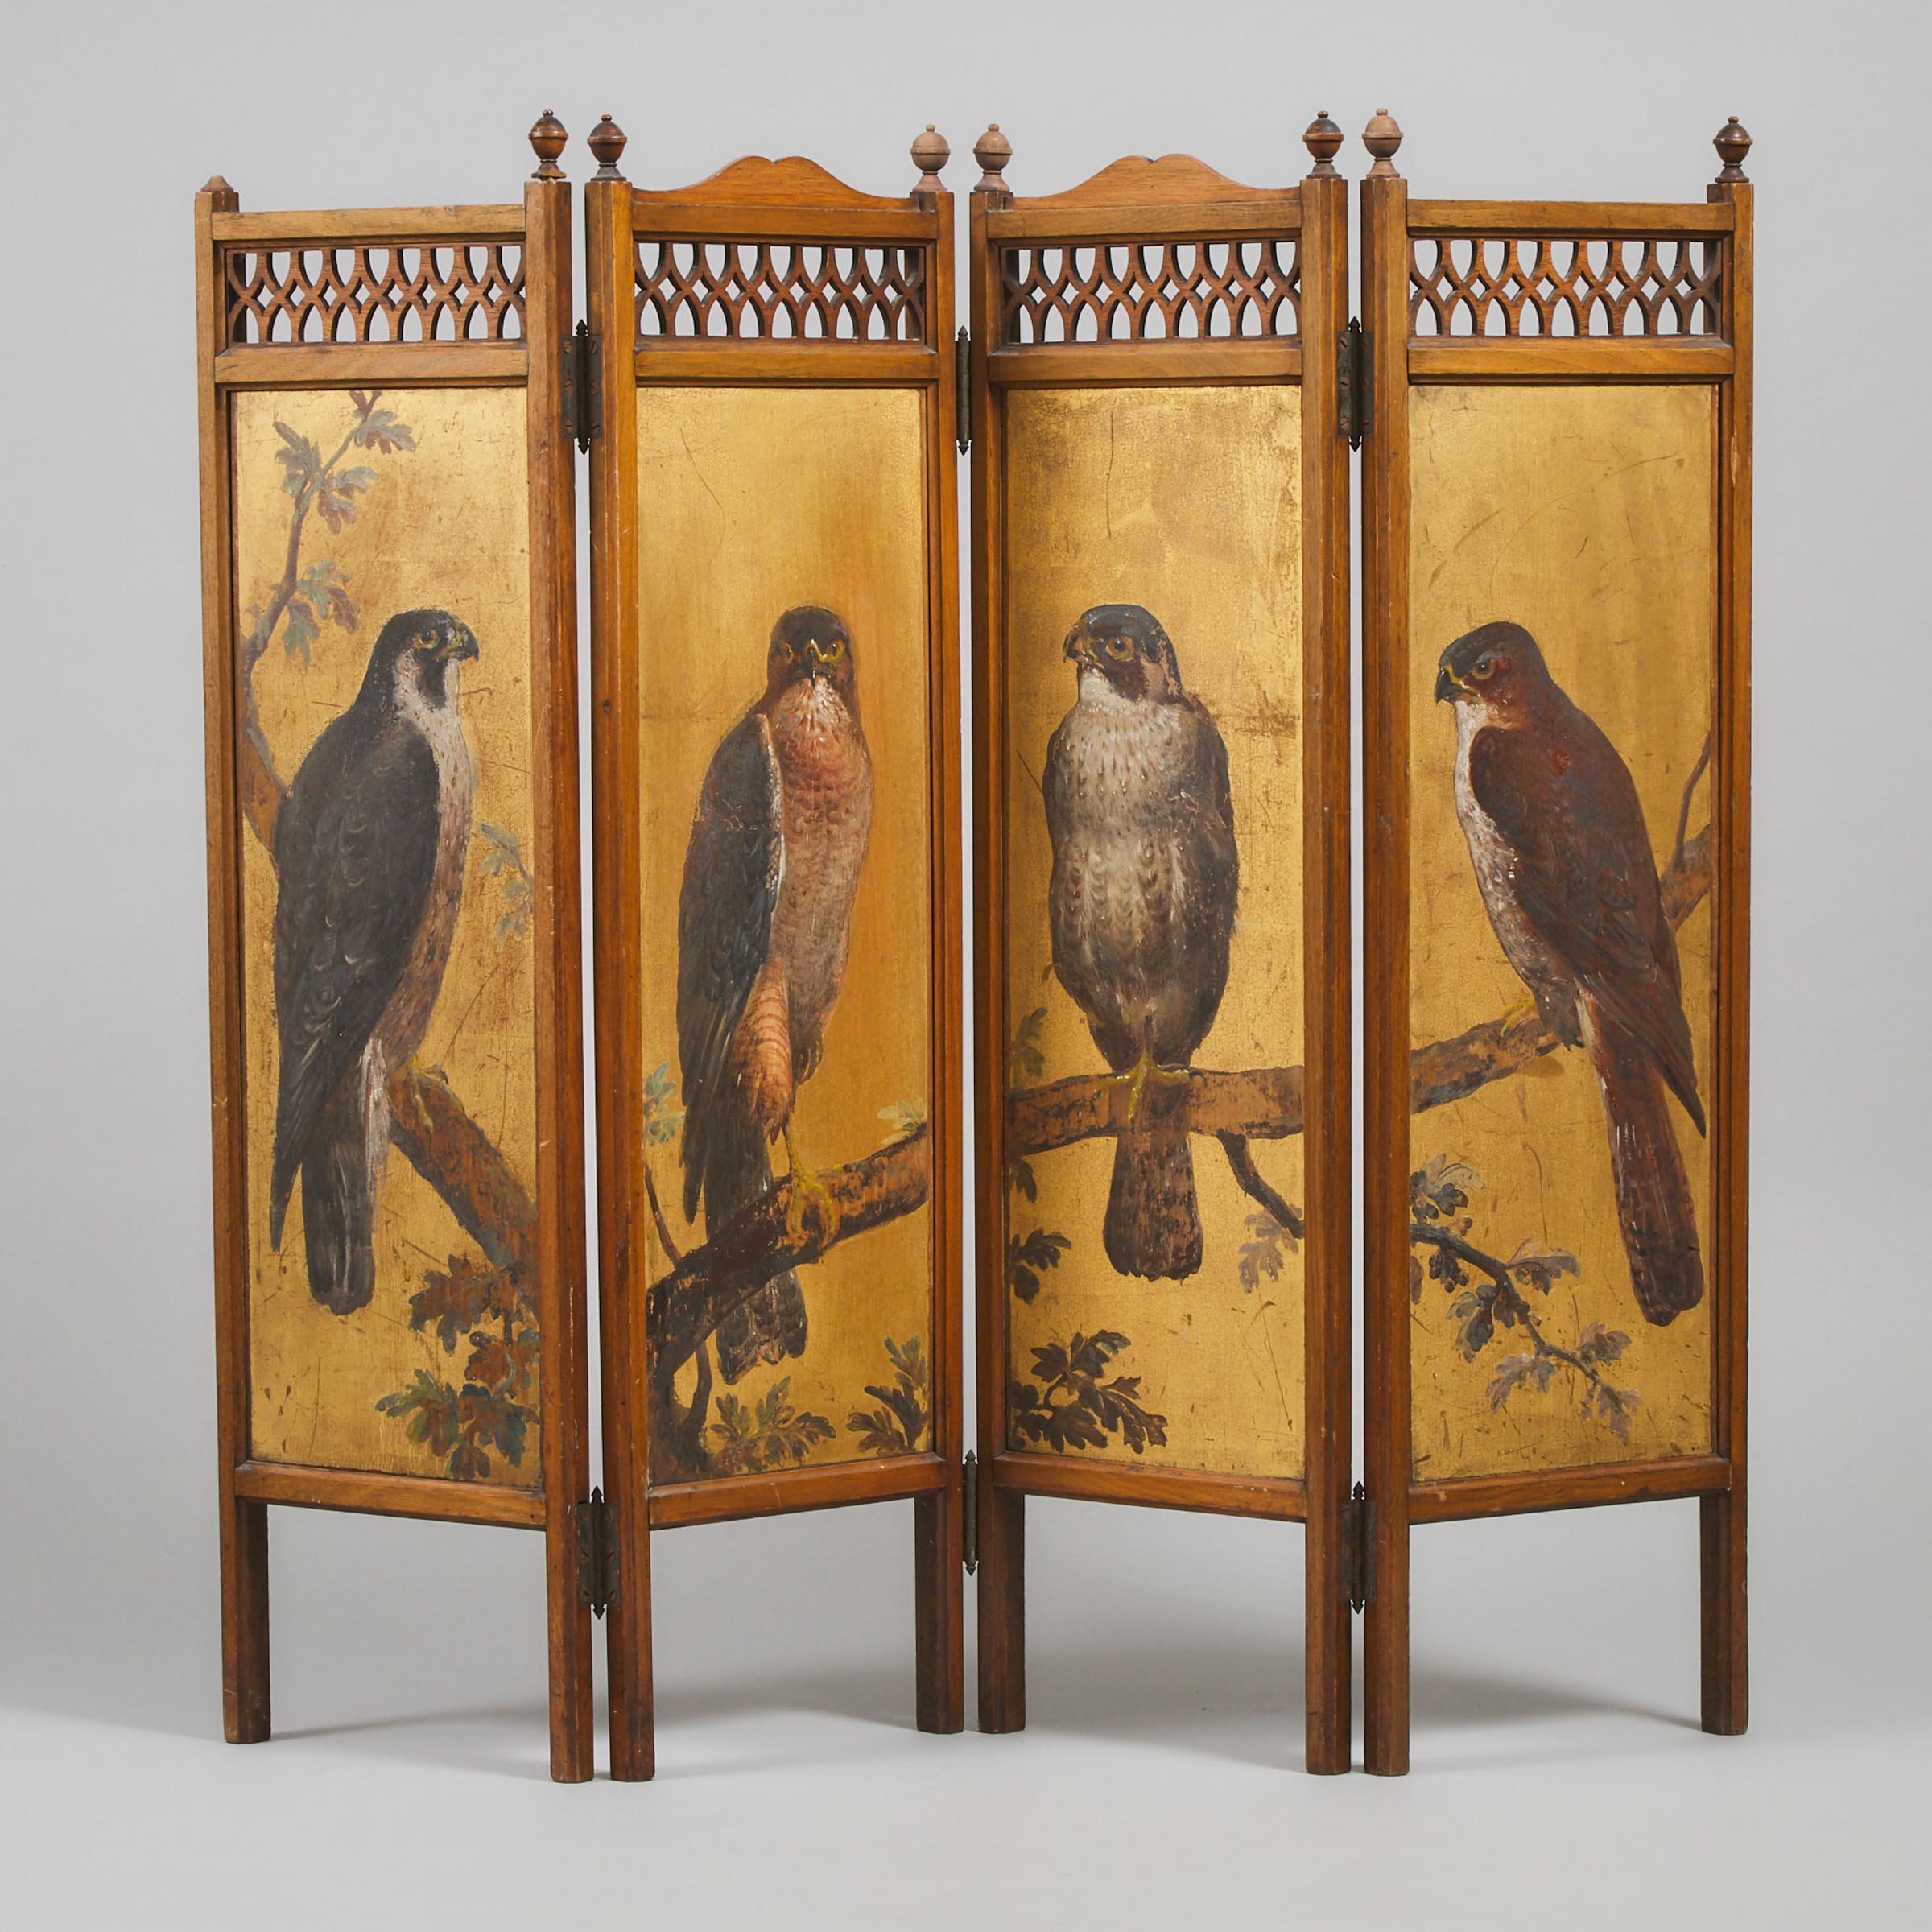 Victorian Painted Walnut Avian Folding Table Screen, late 19th century